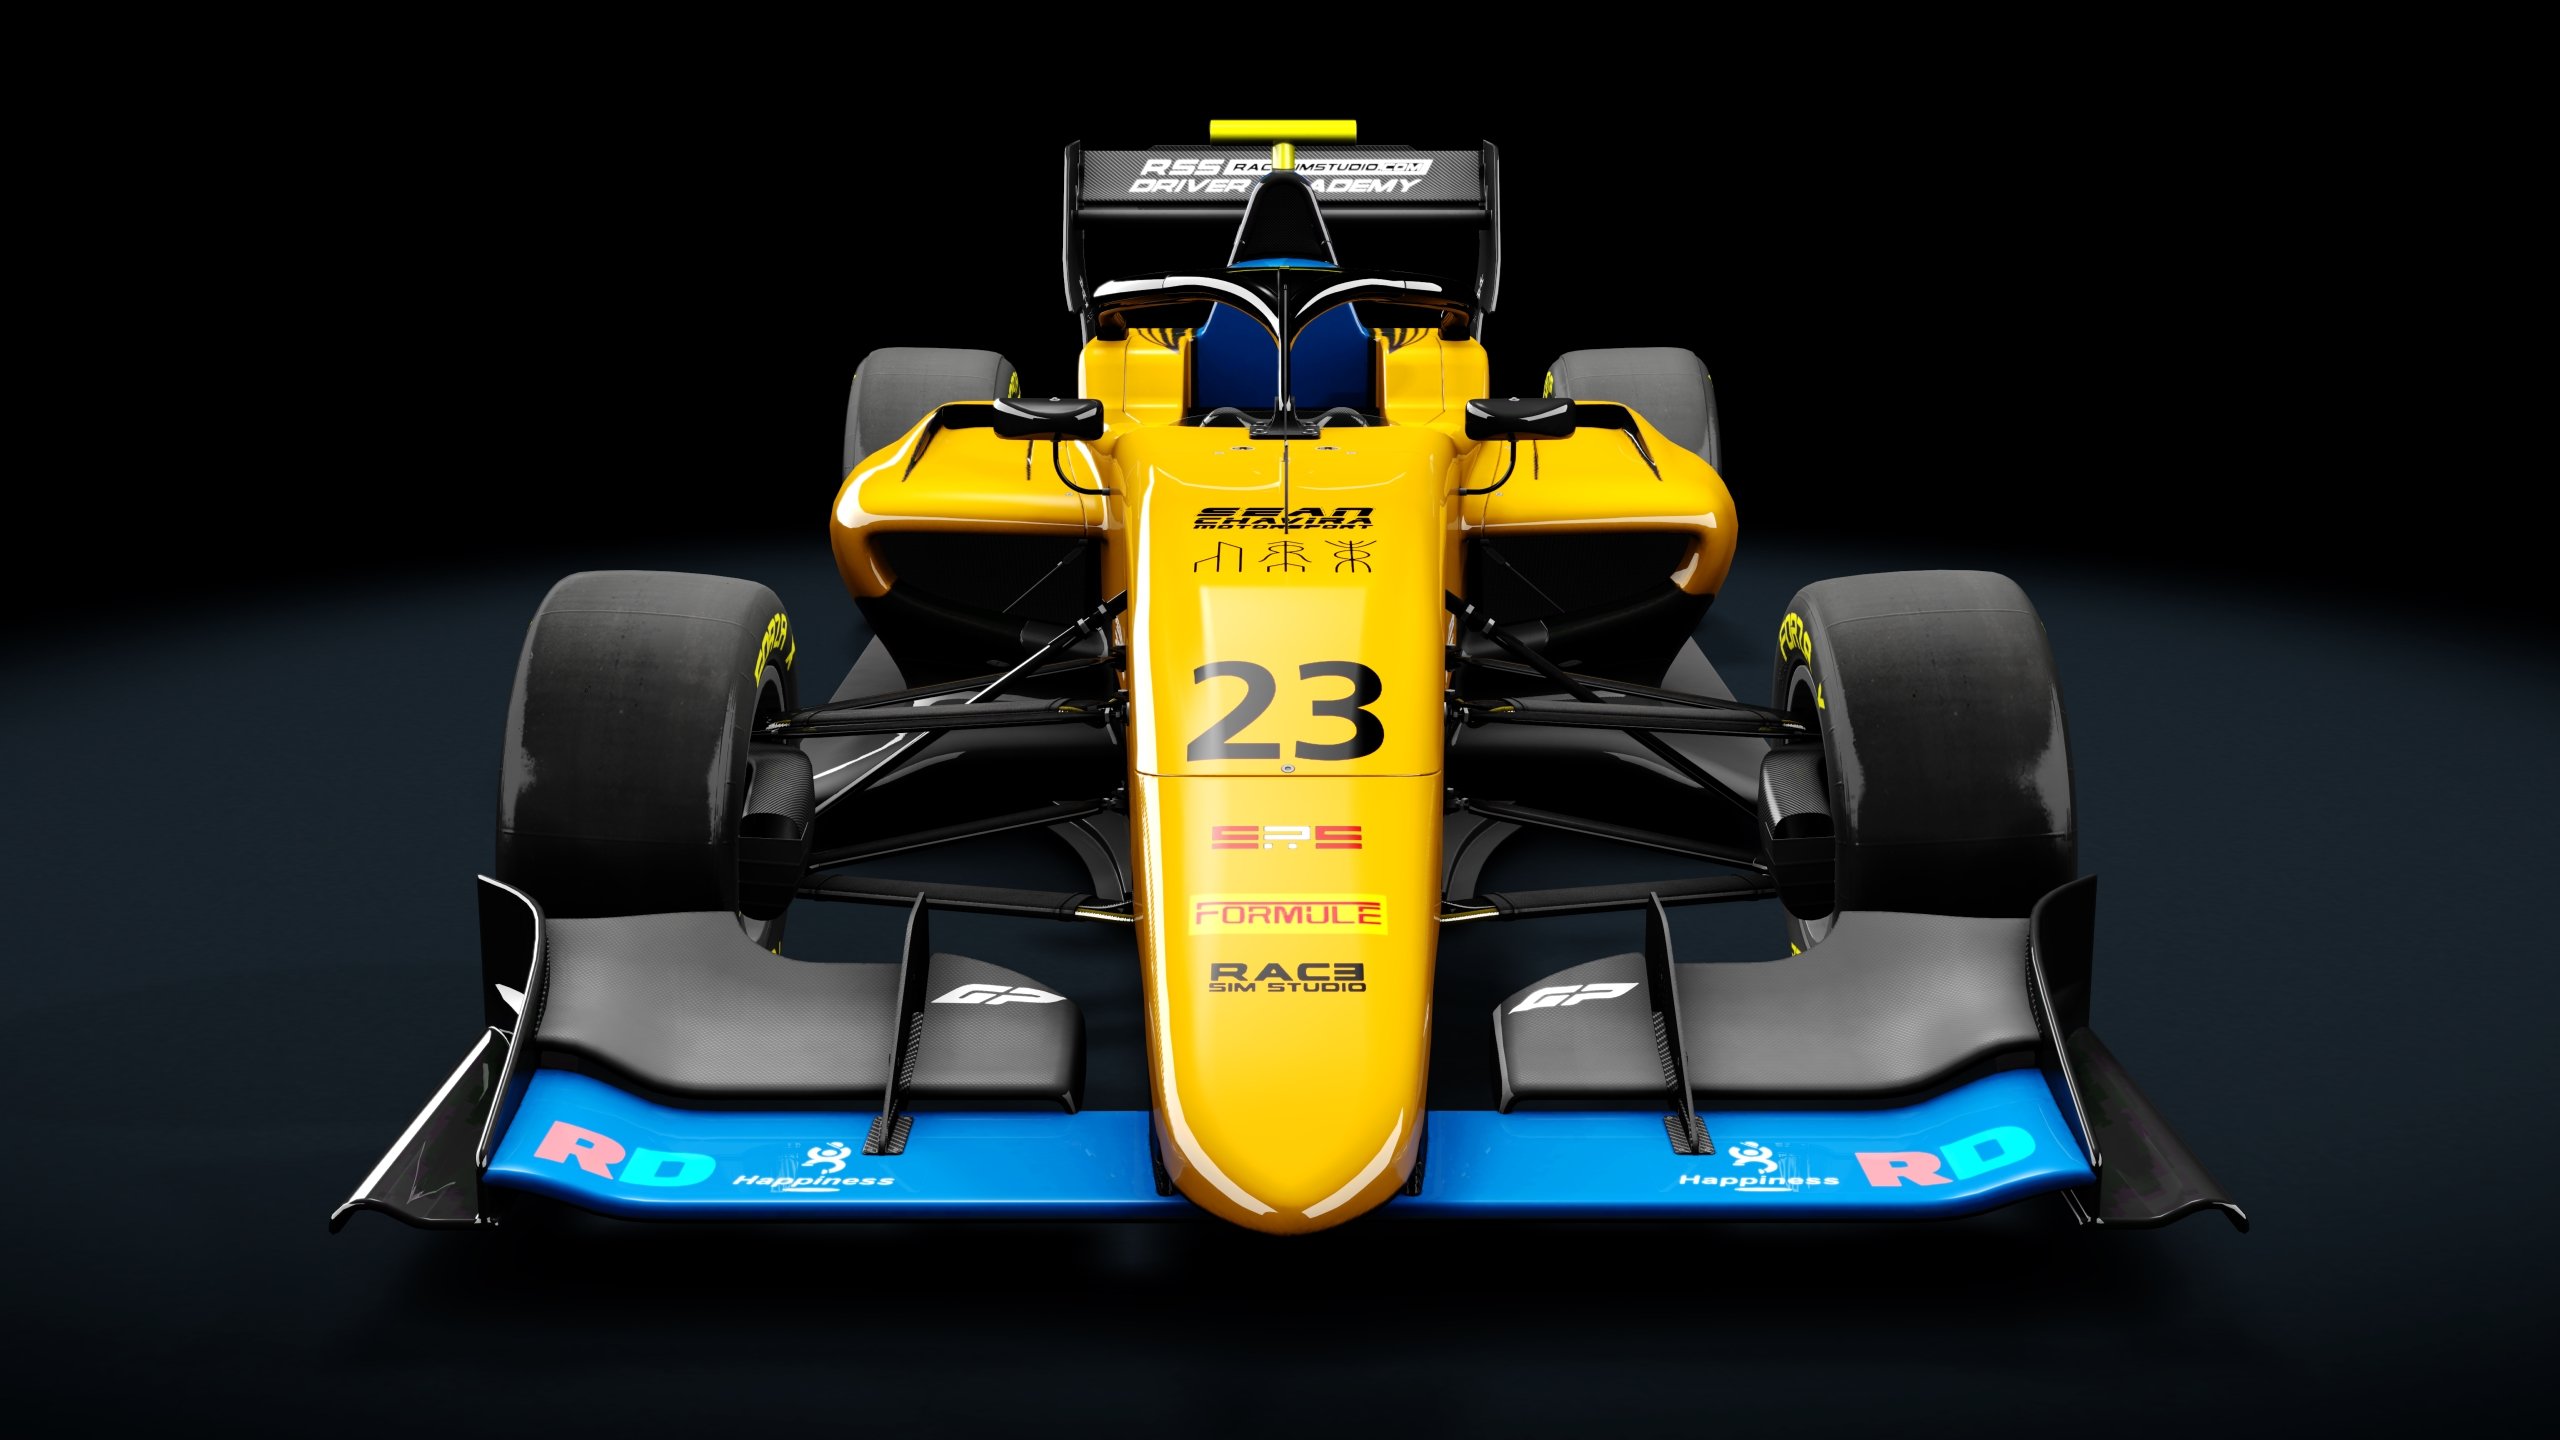 More information about "Assetto Corsa: Formula RSS 3 V6 by Race Sim Studio disponibile"